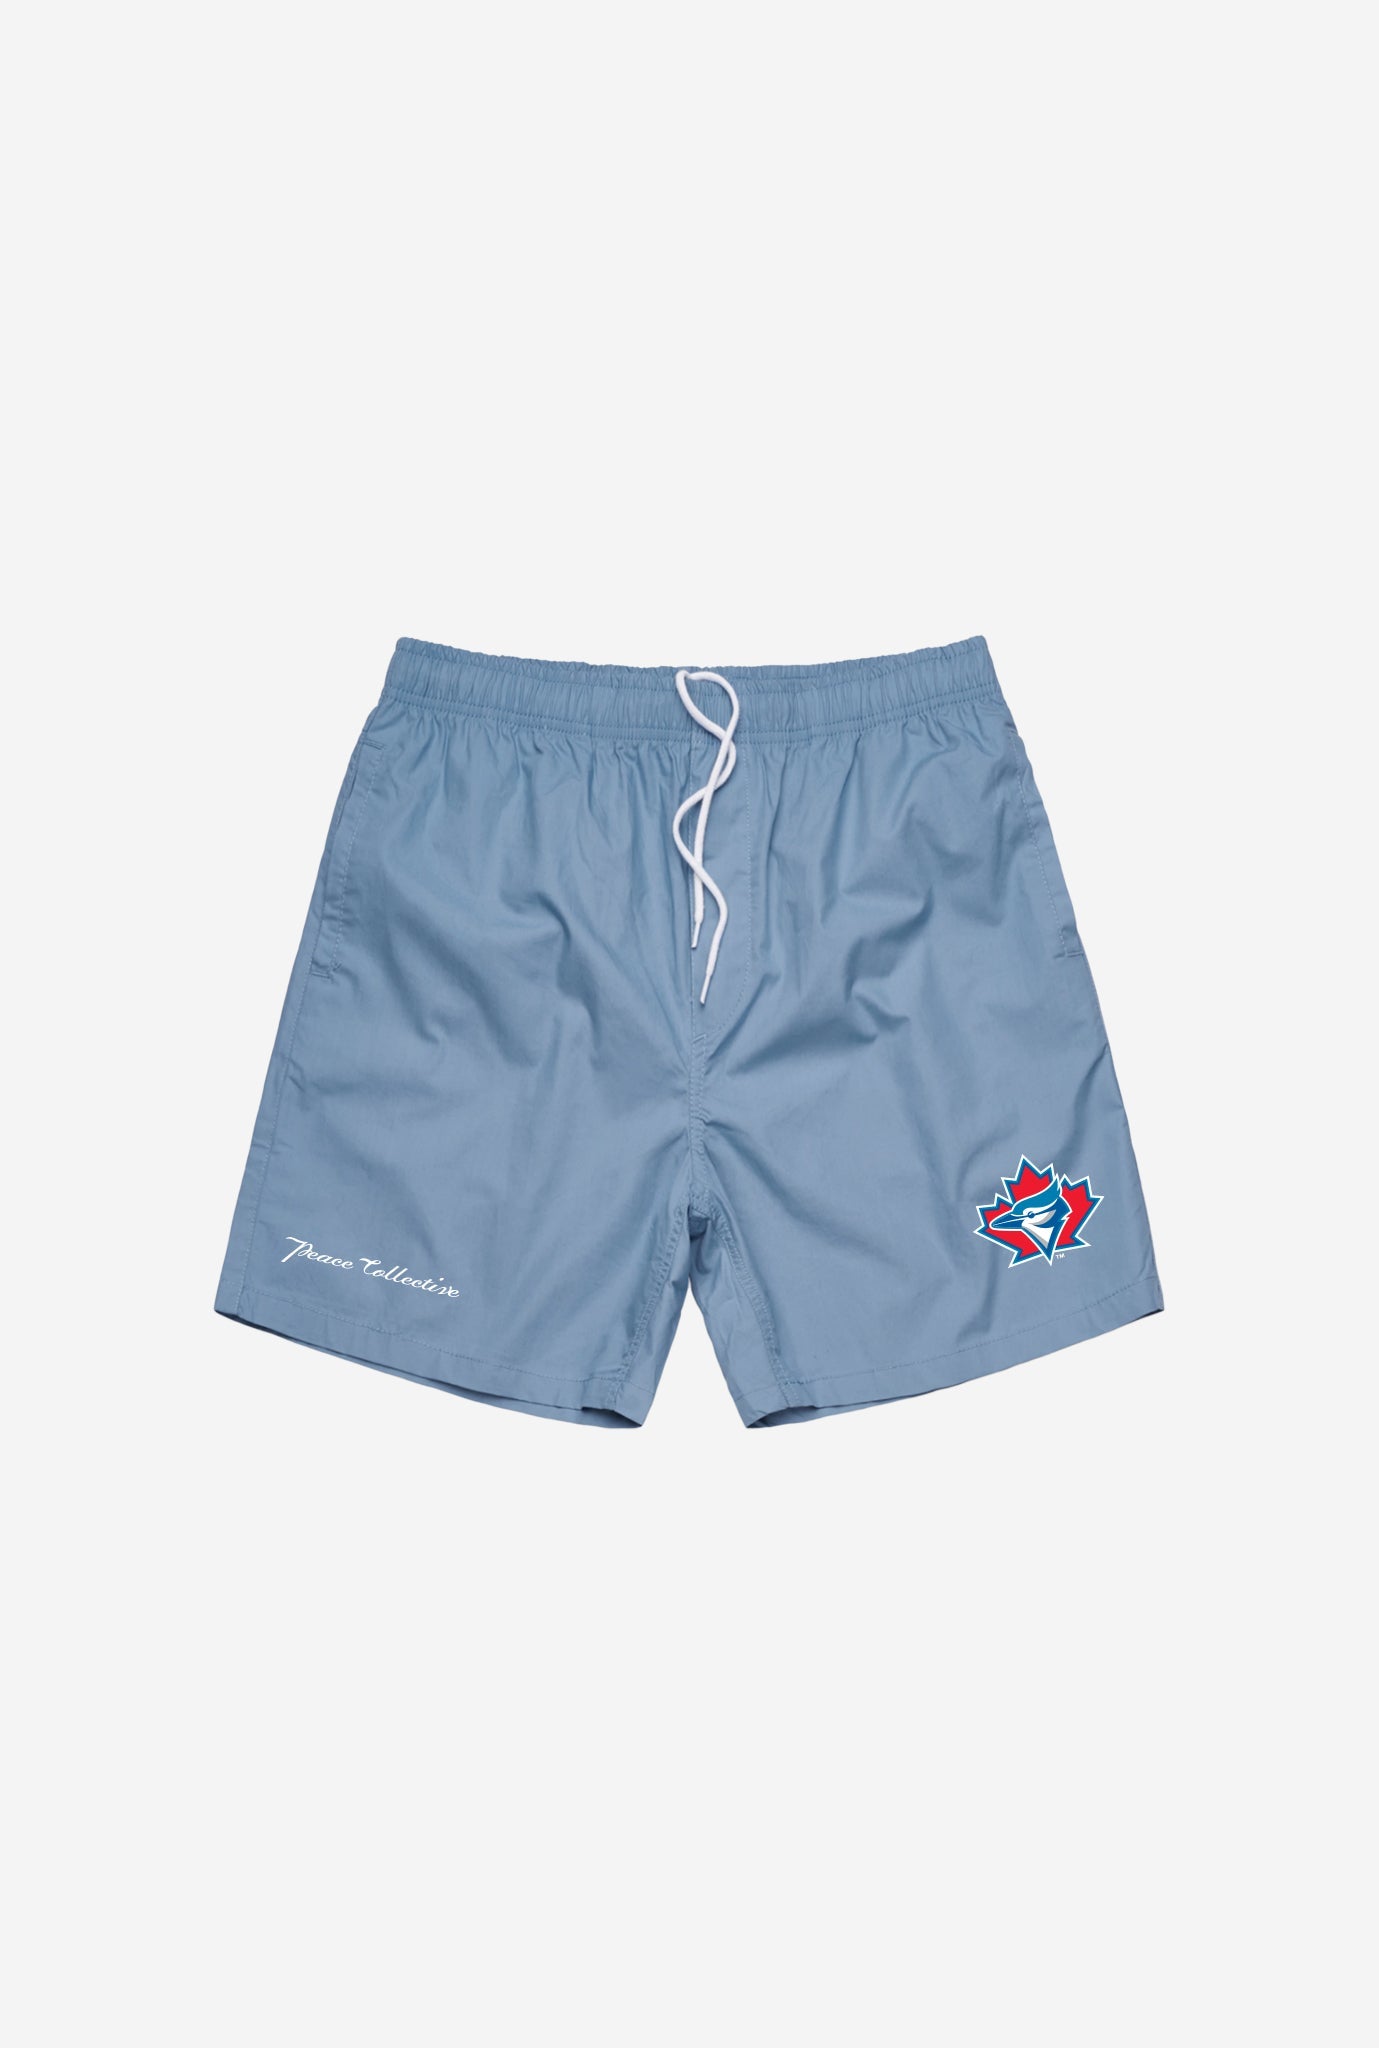 Toronto Blue Jays Shorts - Powder Blue